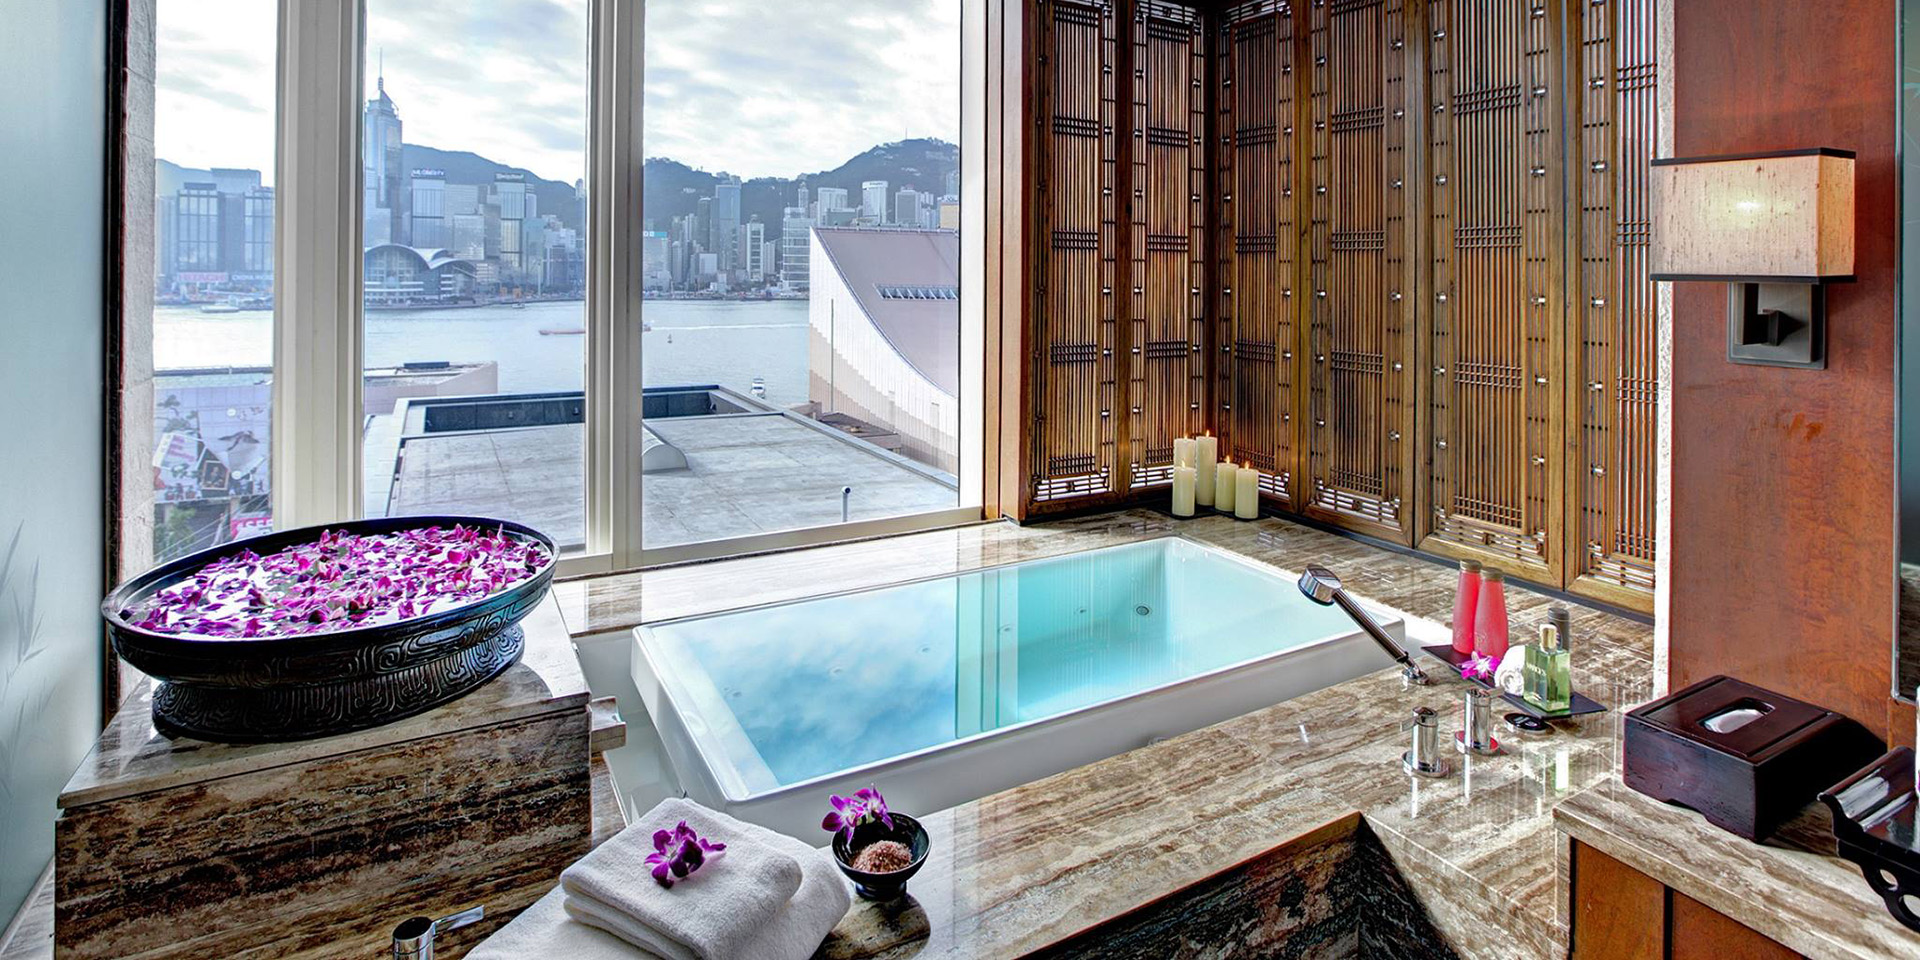 Luxury Hotel Bathtubs In Asia, Hotels With Big Bathtubs